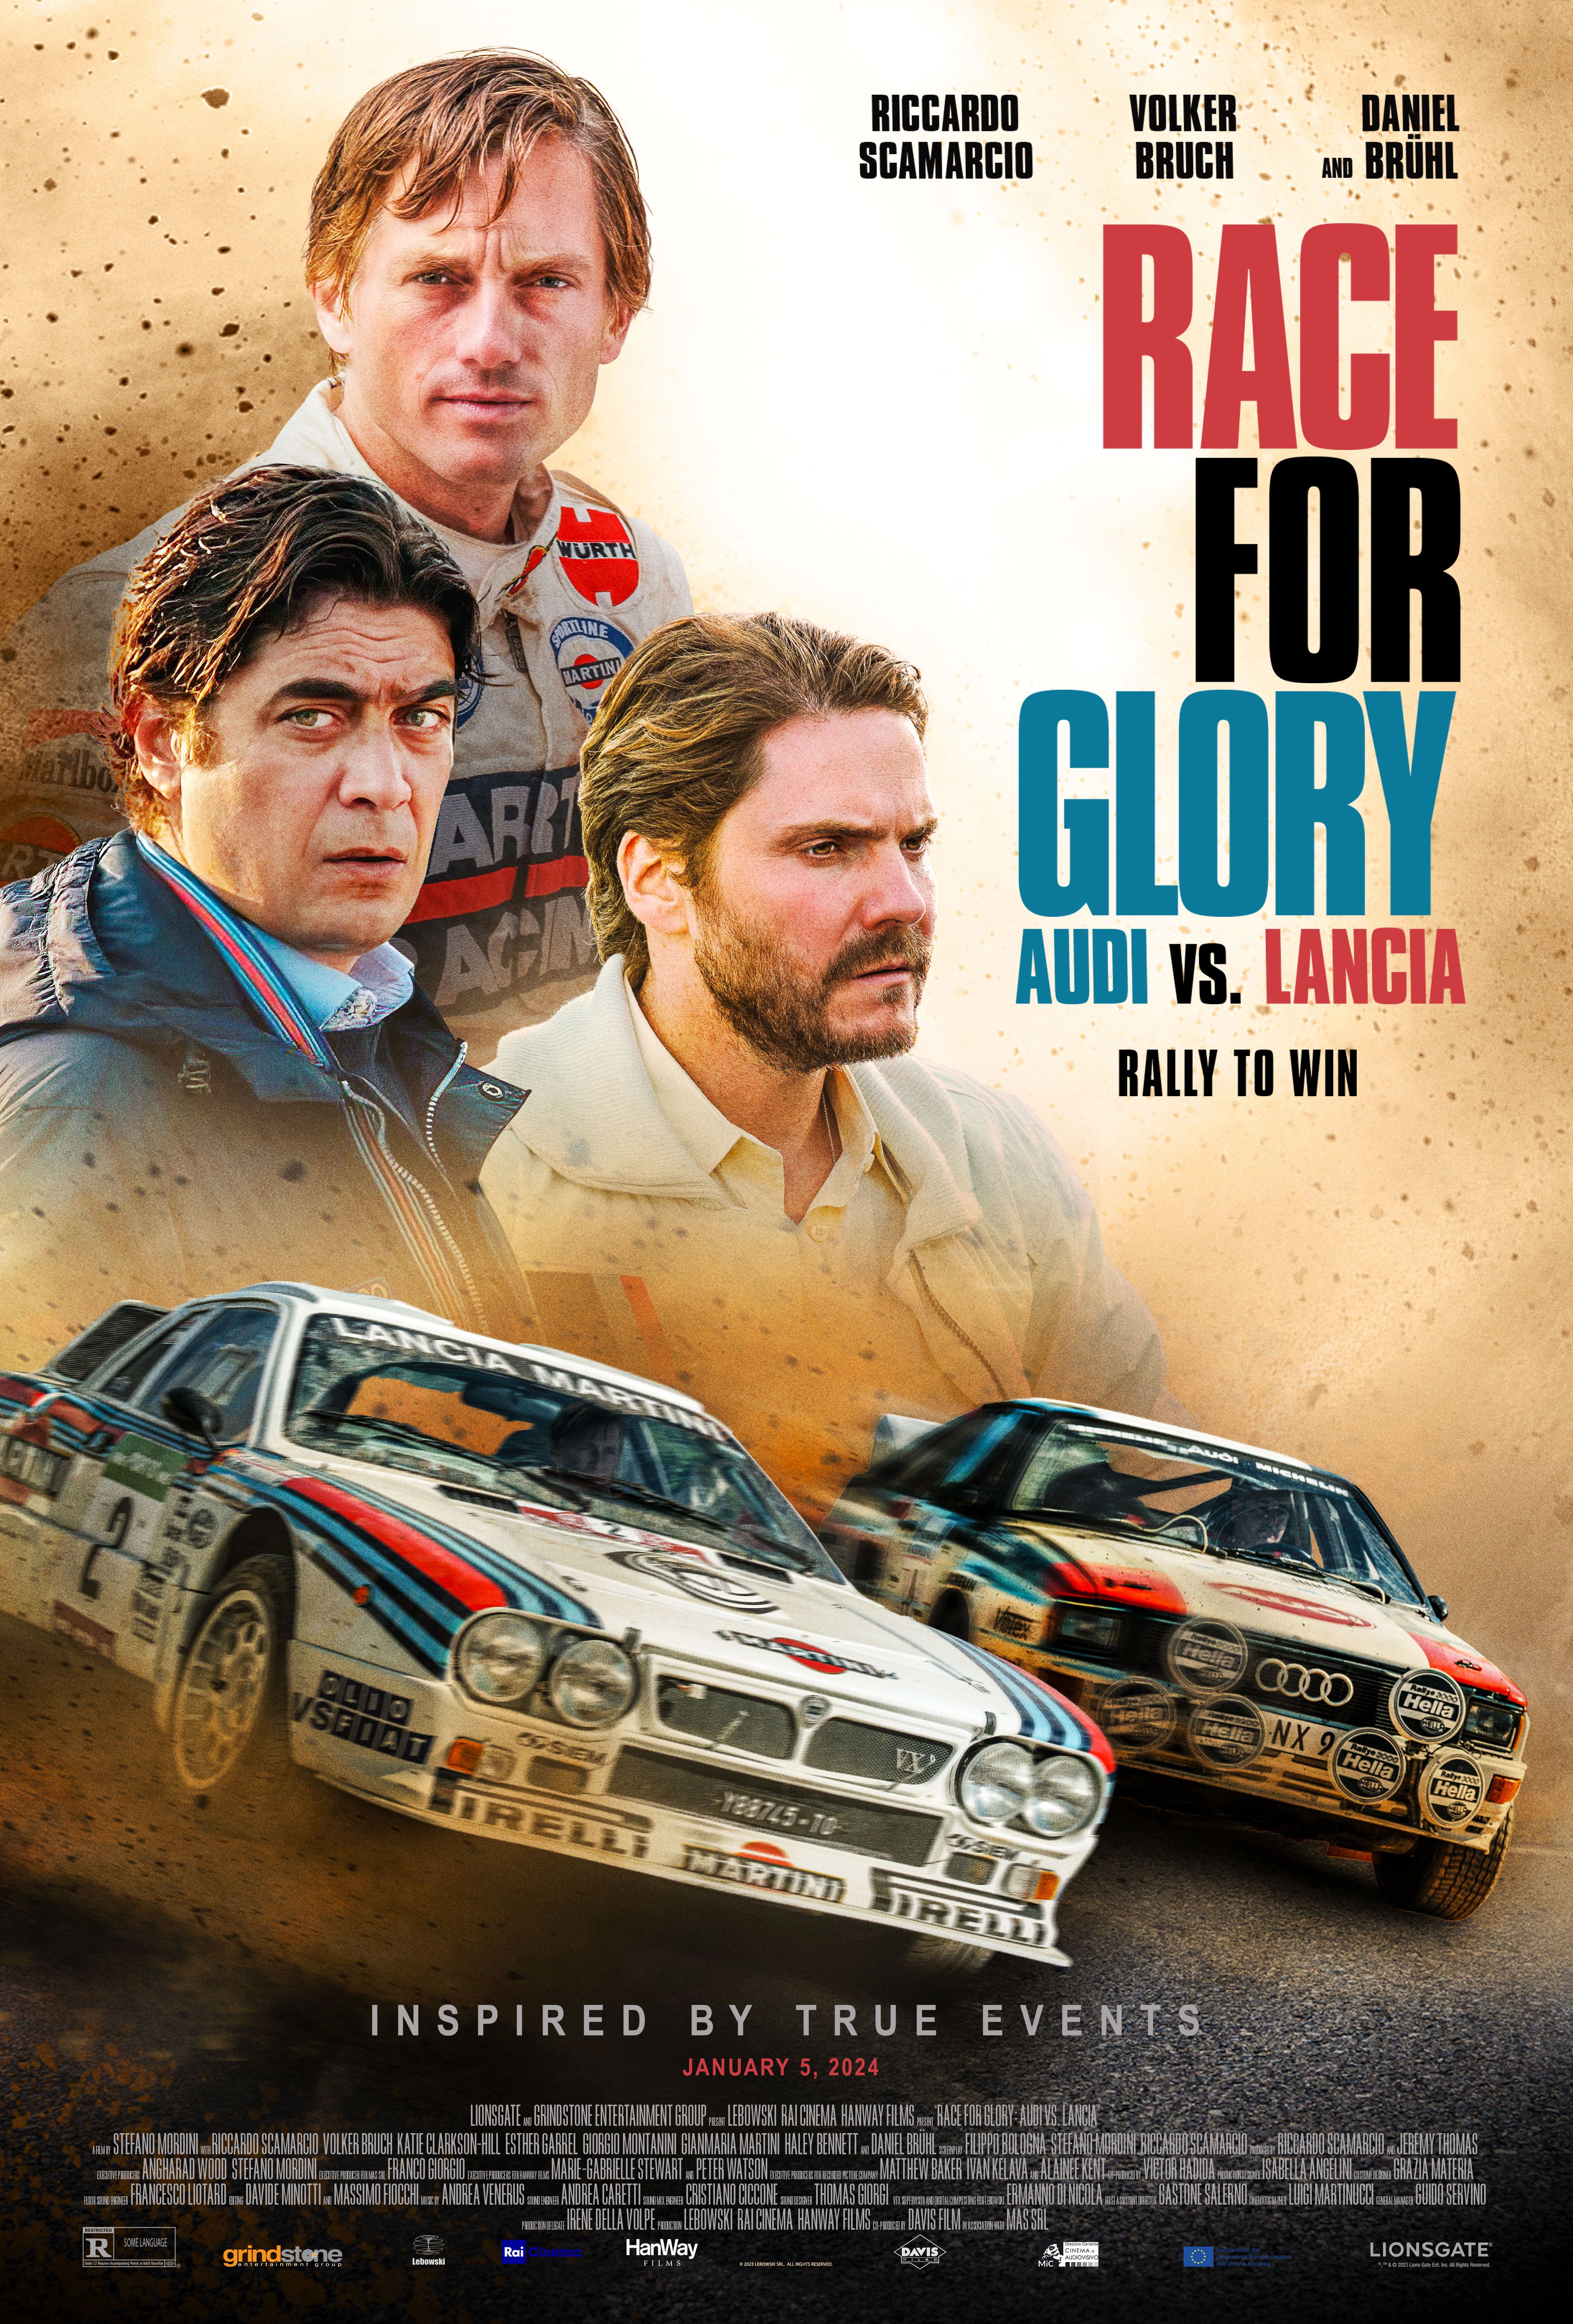 Daniel Brühl, Riccardo Scamarcio, and Volker Bruch on the poster for Race for Glory: Audi vs. Lancia. 